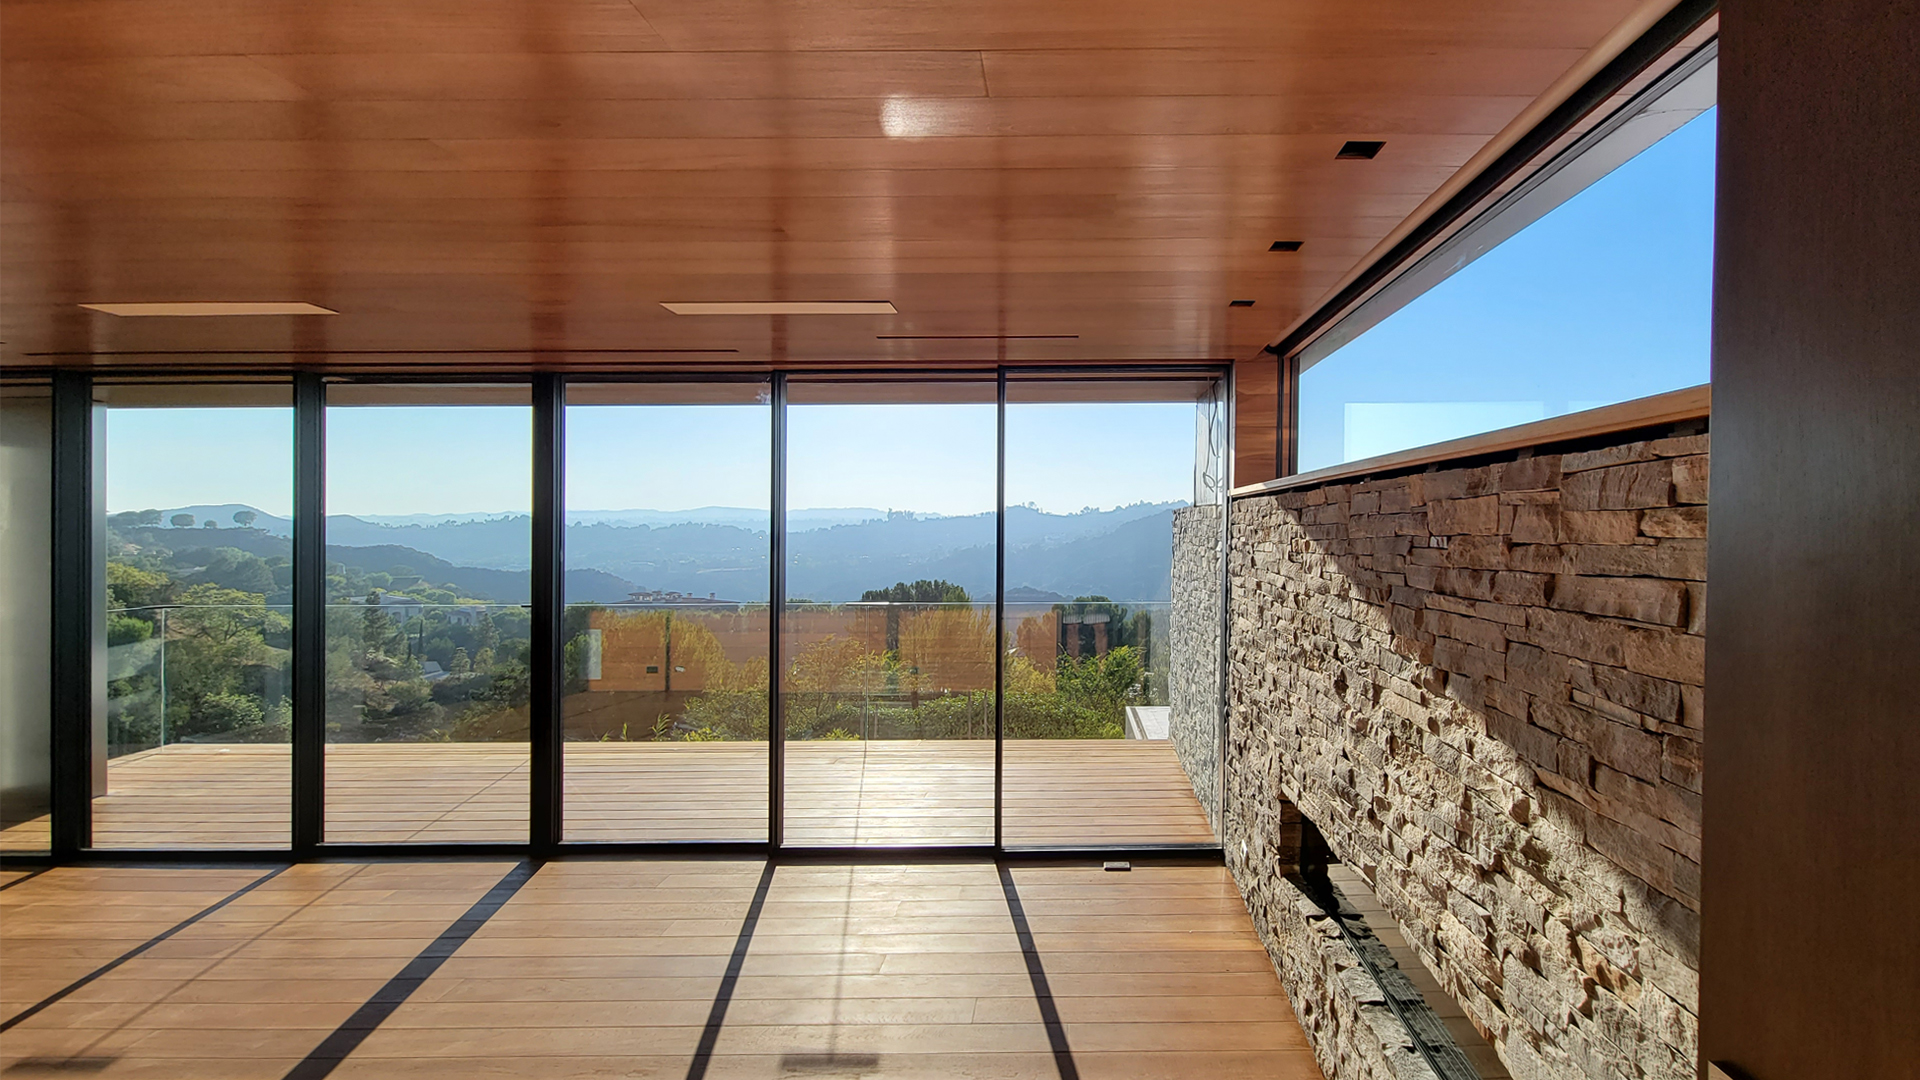 Paolo-Volpis-Architect-hillside-house-modern-minimalist-stone-marble-black-kitchen-wood-slats-teak-glass-mid-century-modern-pool-with-poliform-boffi copy.jpg